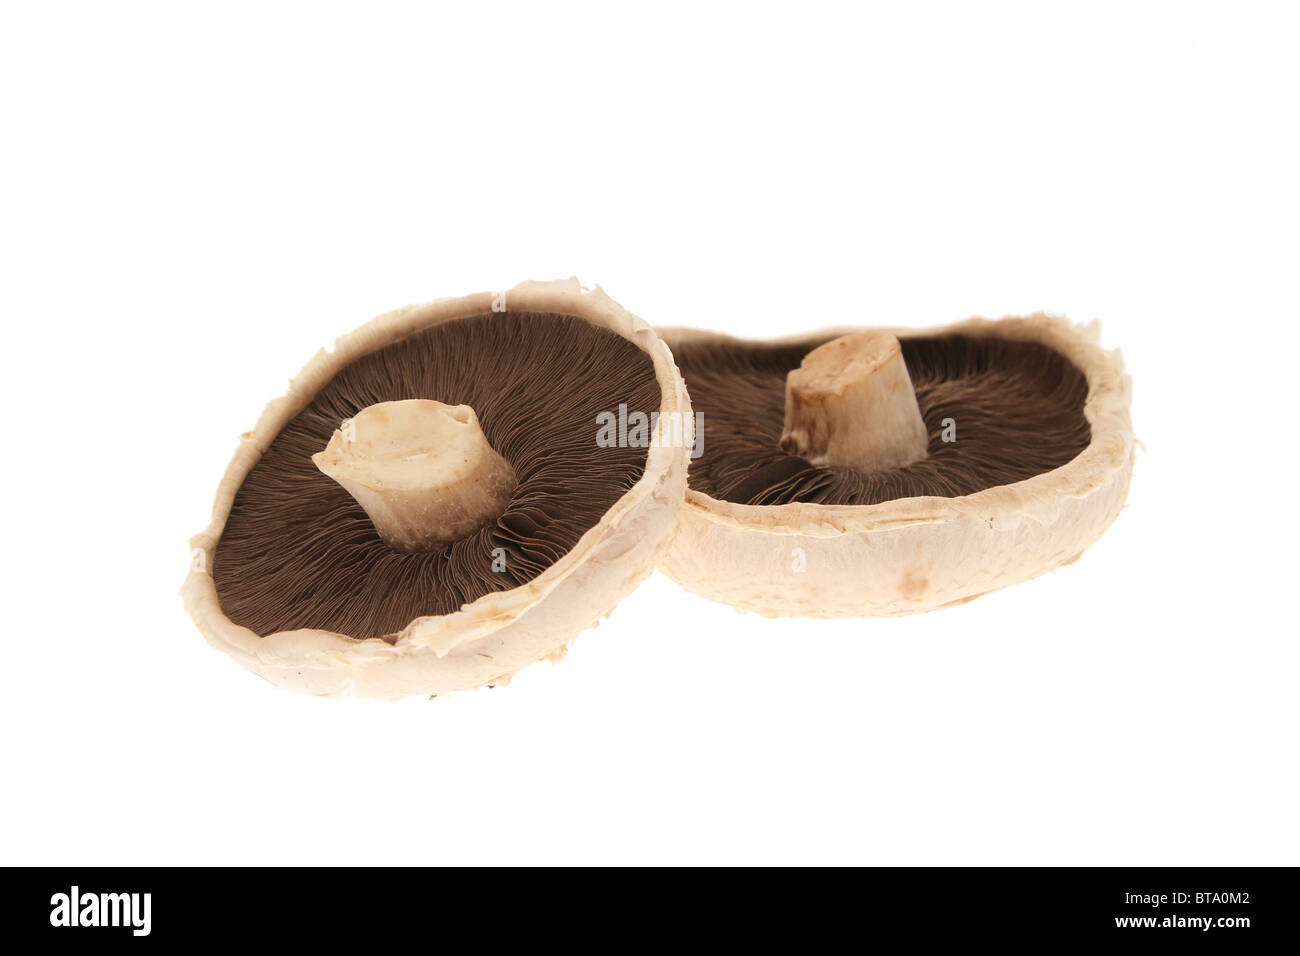 Two common mushrooms (Agaricus bisporus) on a white background. Stock Photo